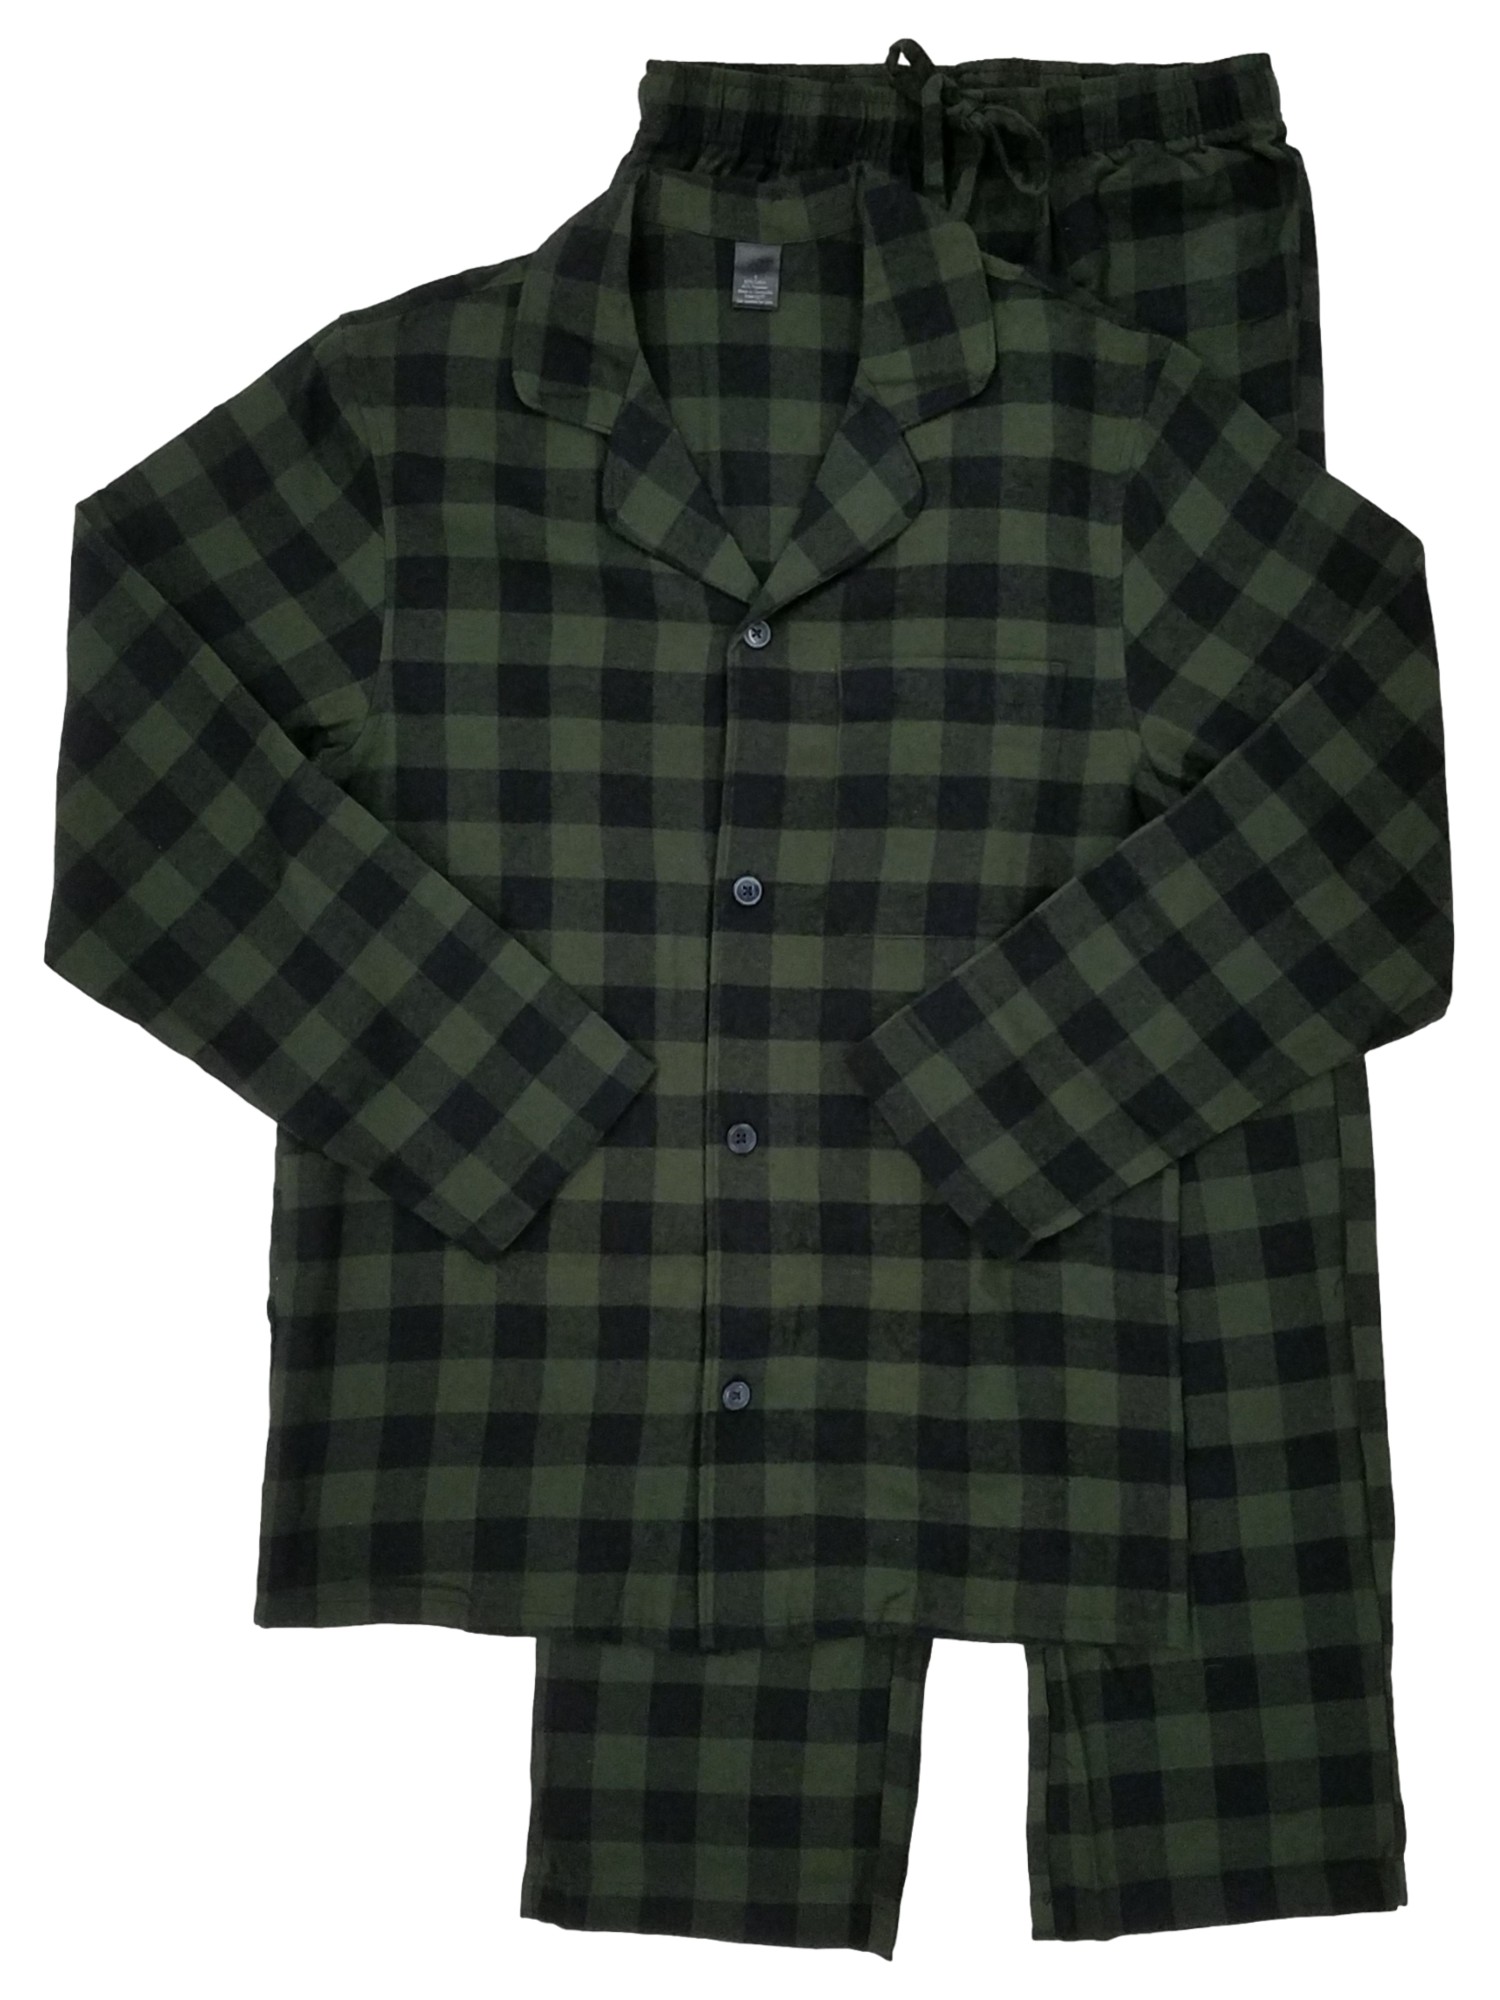 Generic Mens 2-Piece Green Buffalo Plaid Flannel Sleep Set Sleepwear Pajama Set S